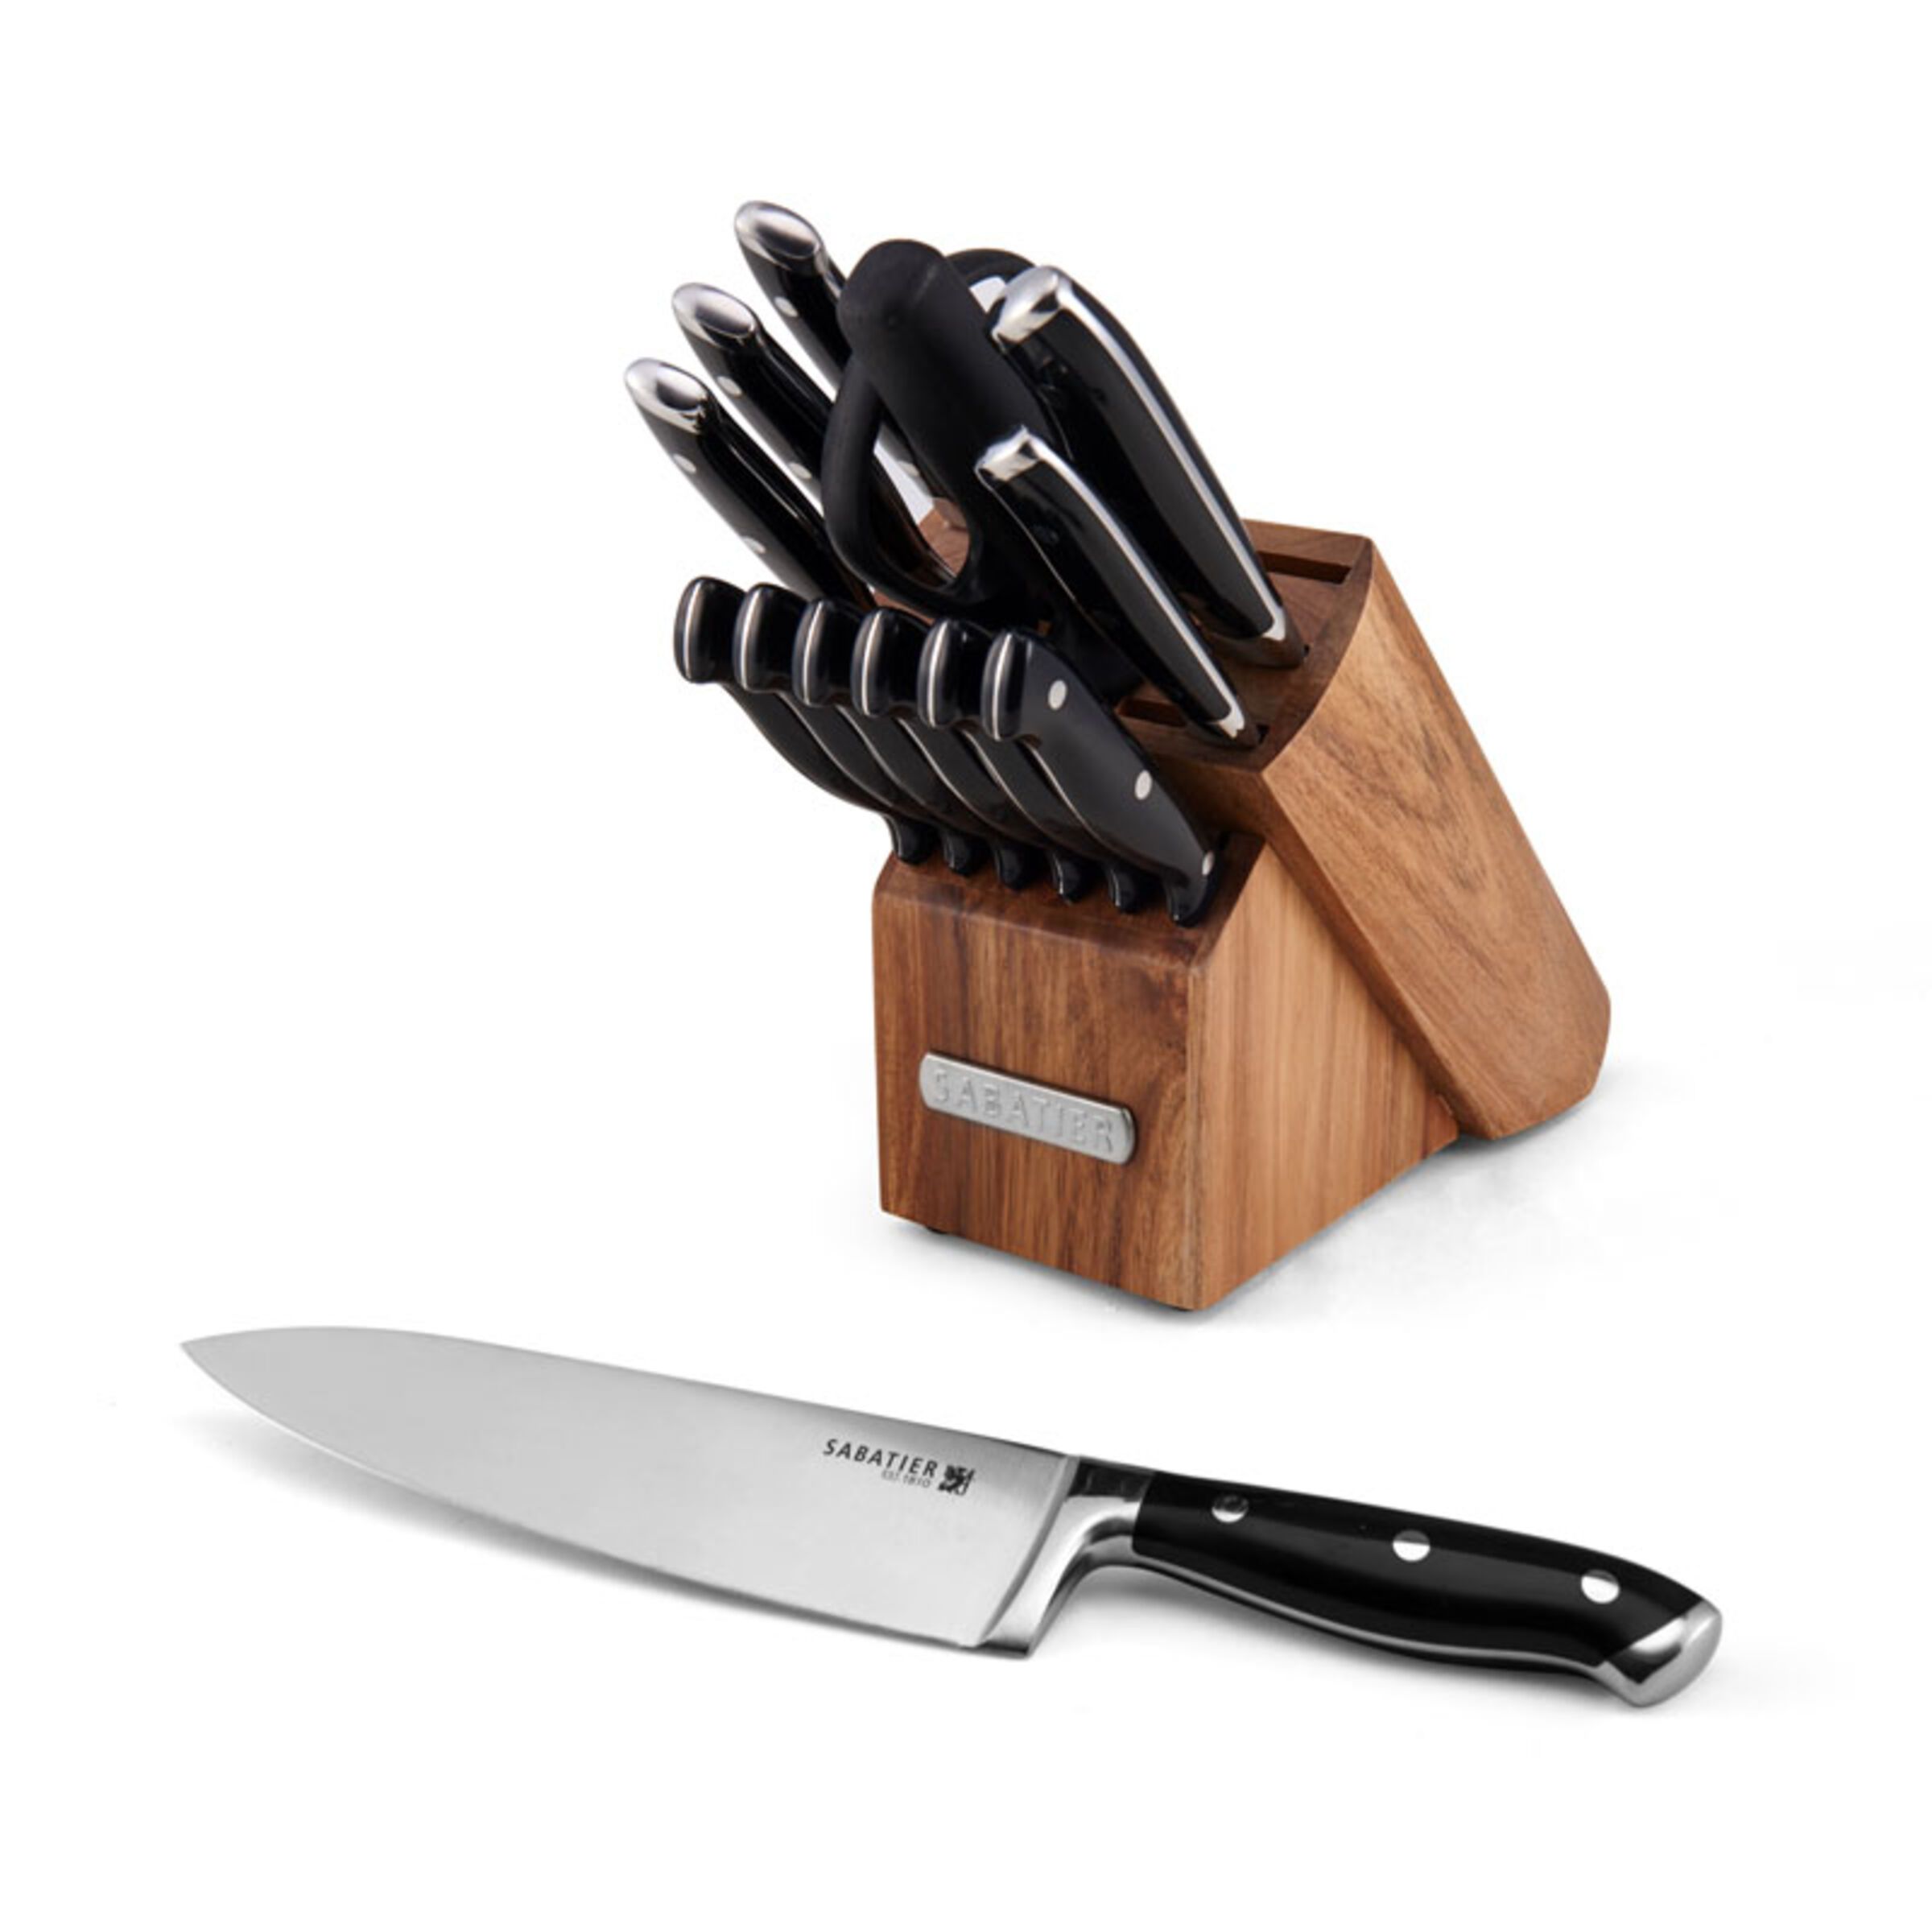 Fingerhut - Sabatier 15-Pc. Knife Block Set